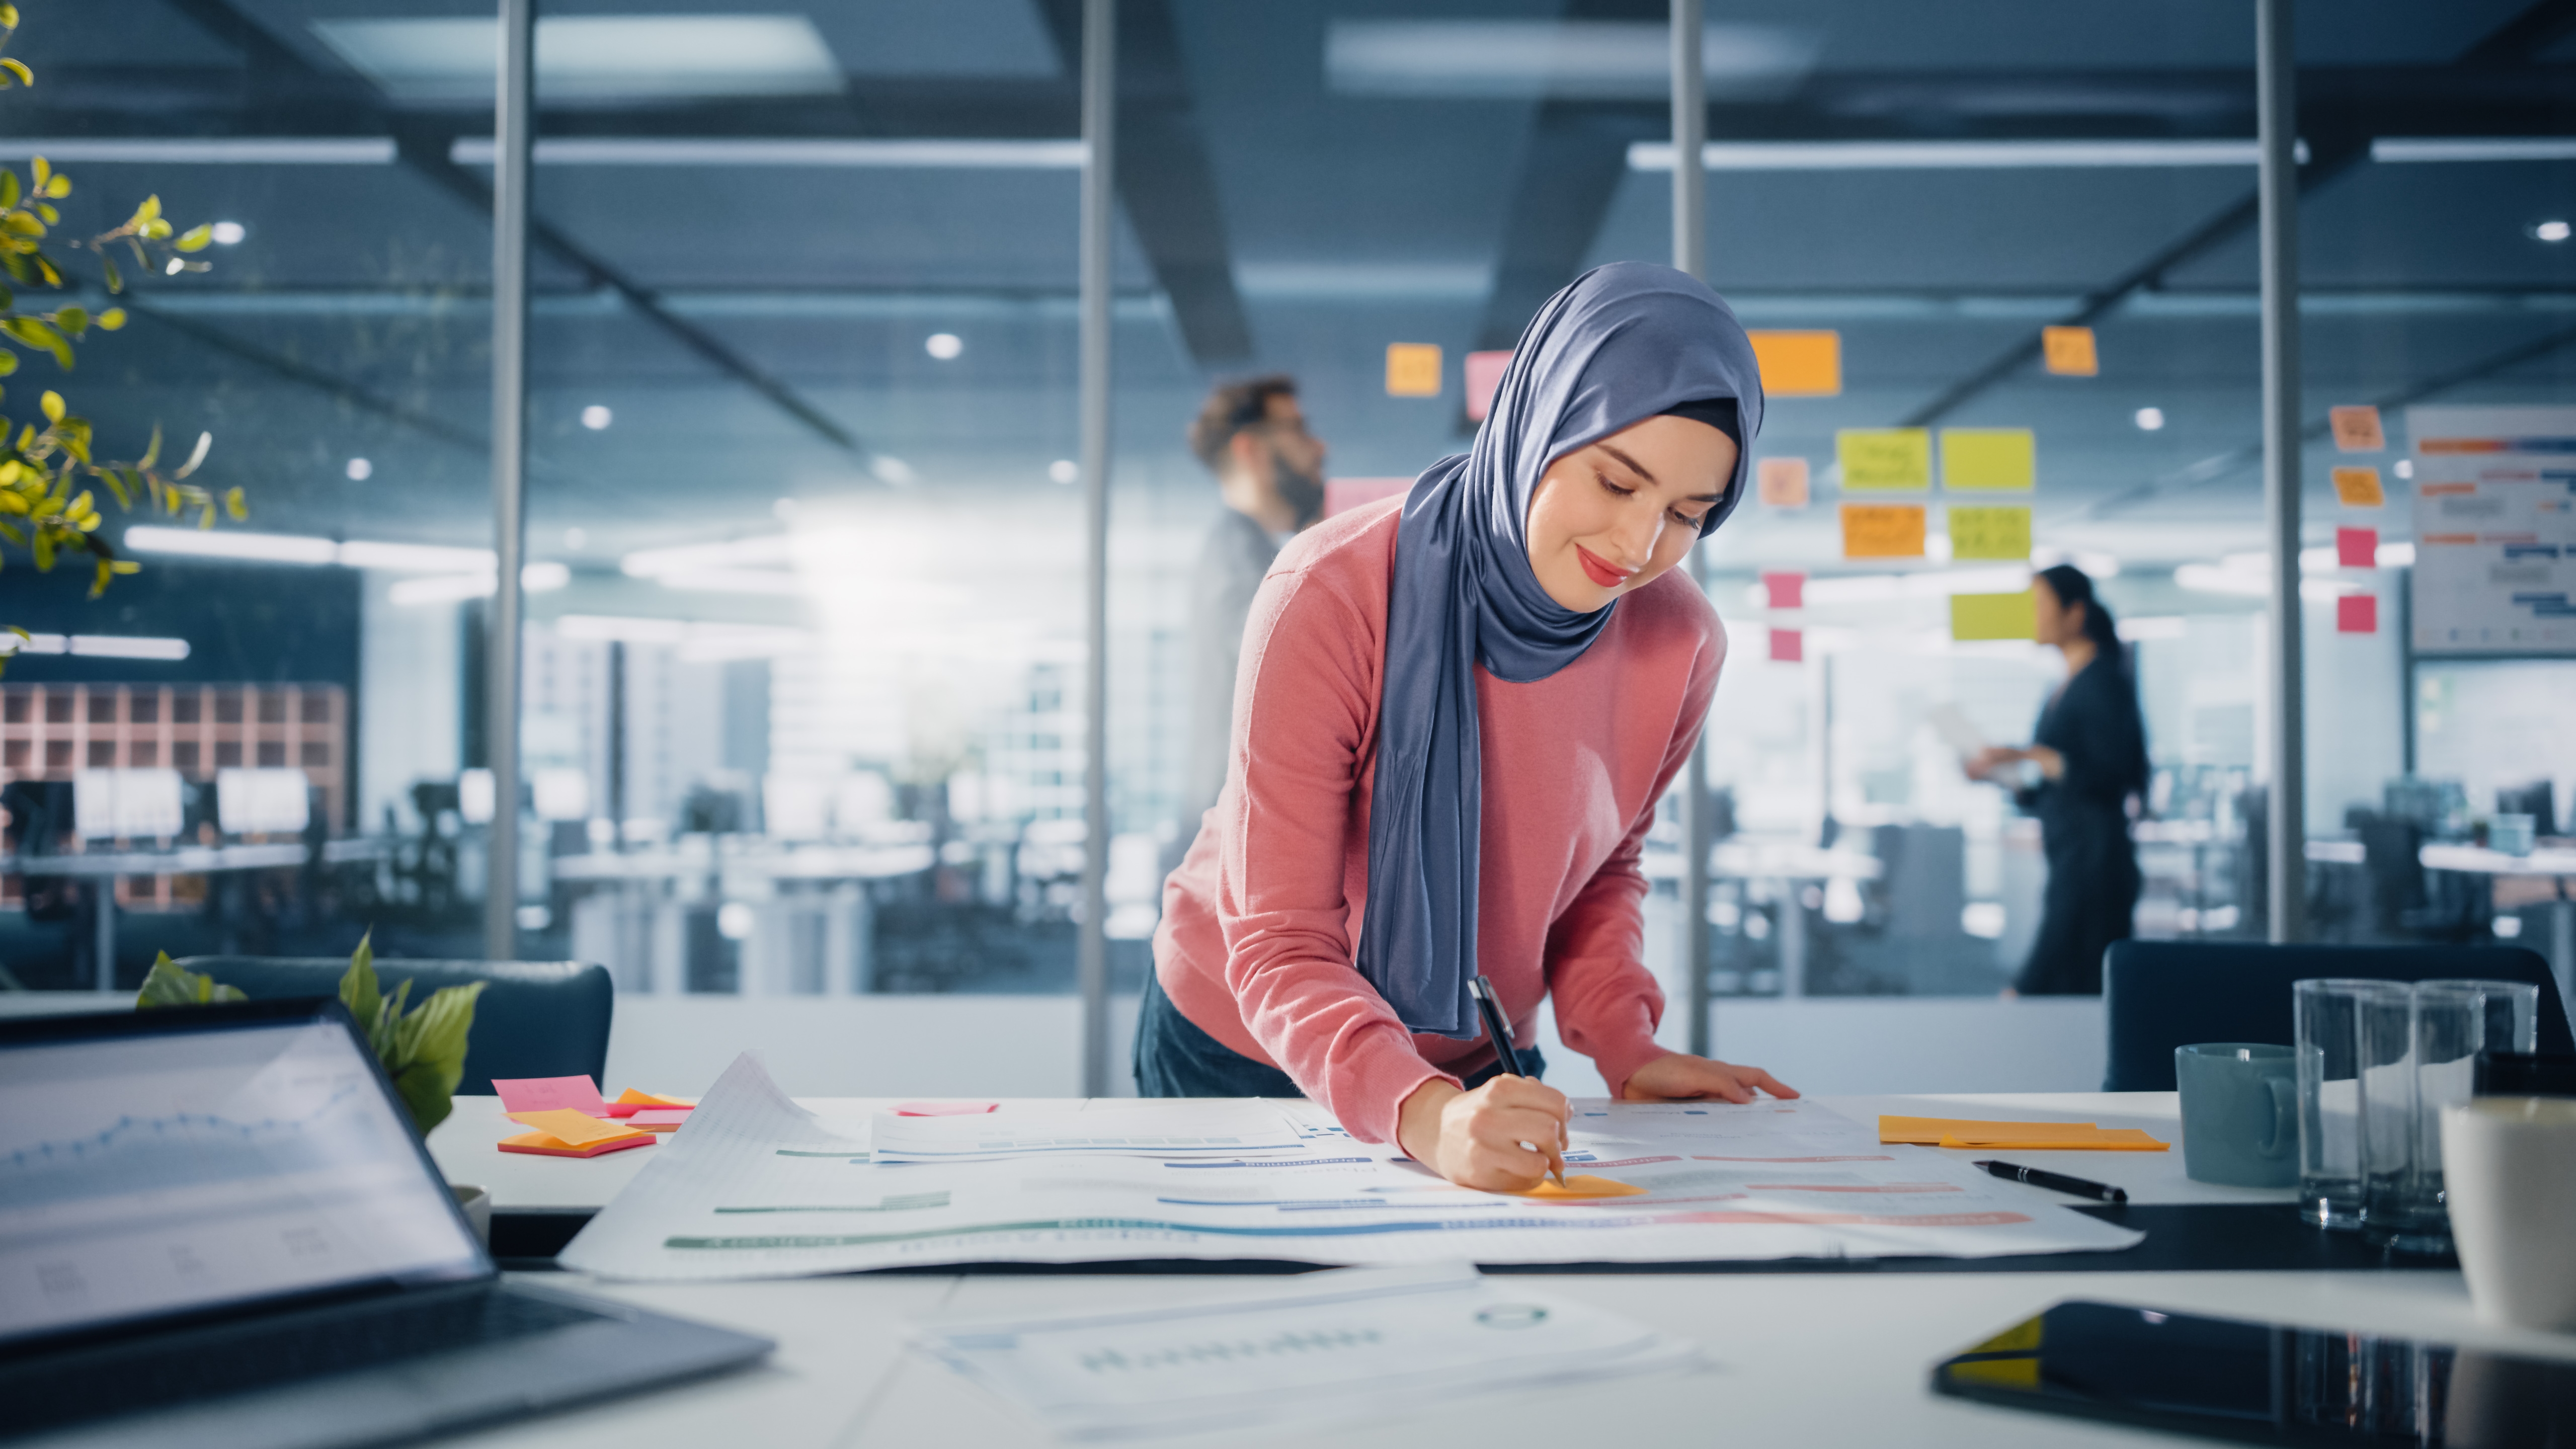 Muslim woman in an office space 